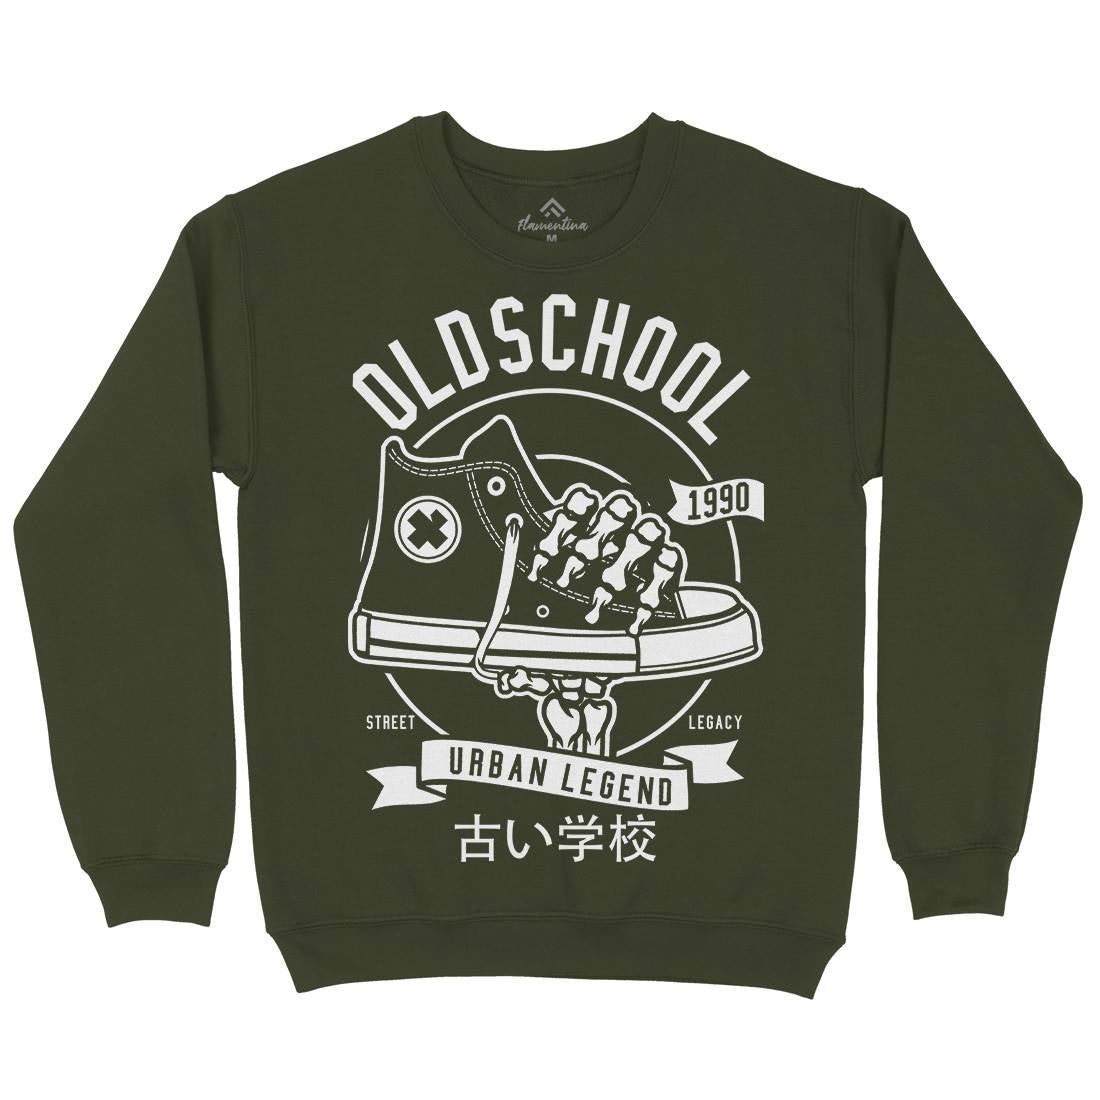 Old School Mens Crew Neck Sweatshirt Retro B591